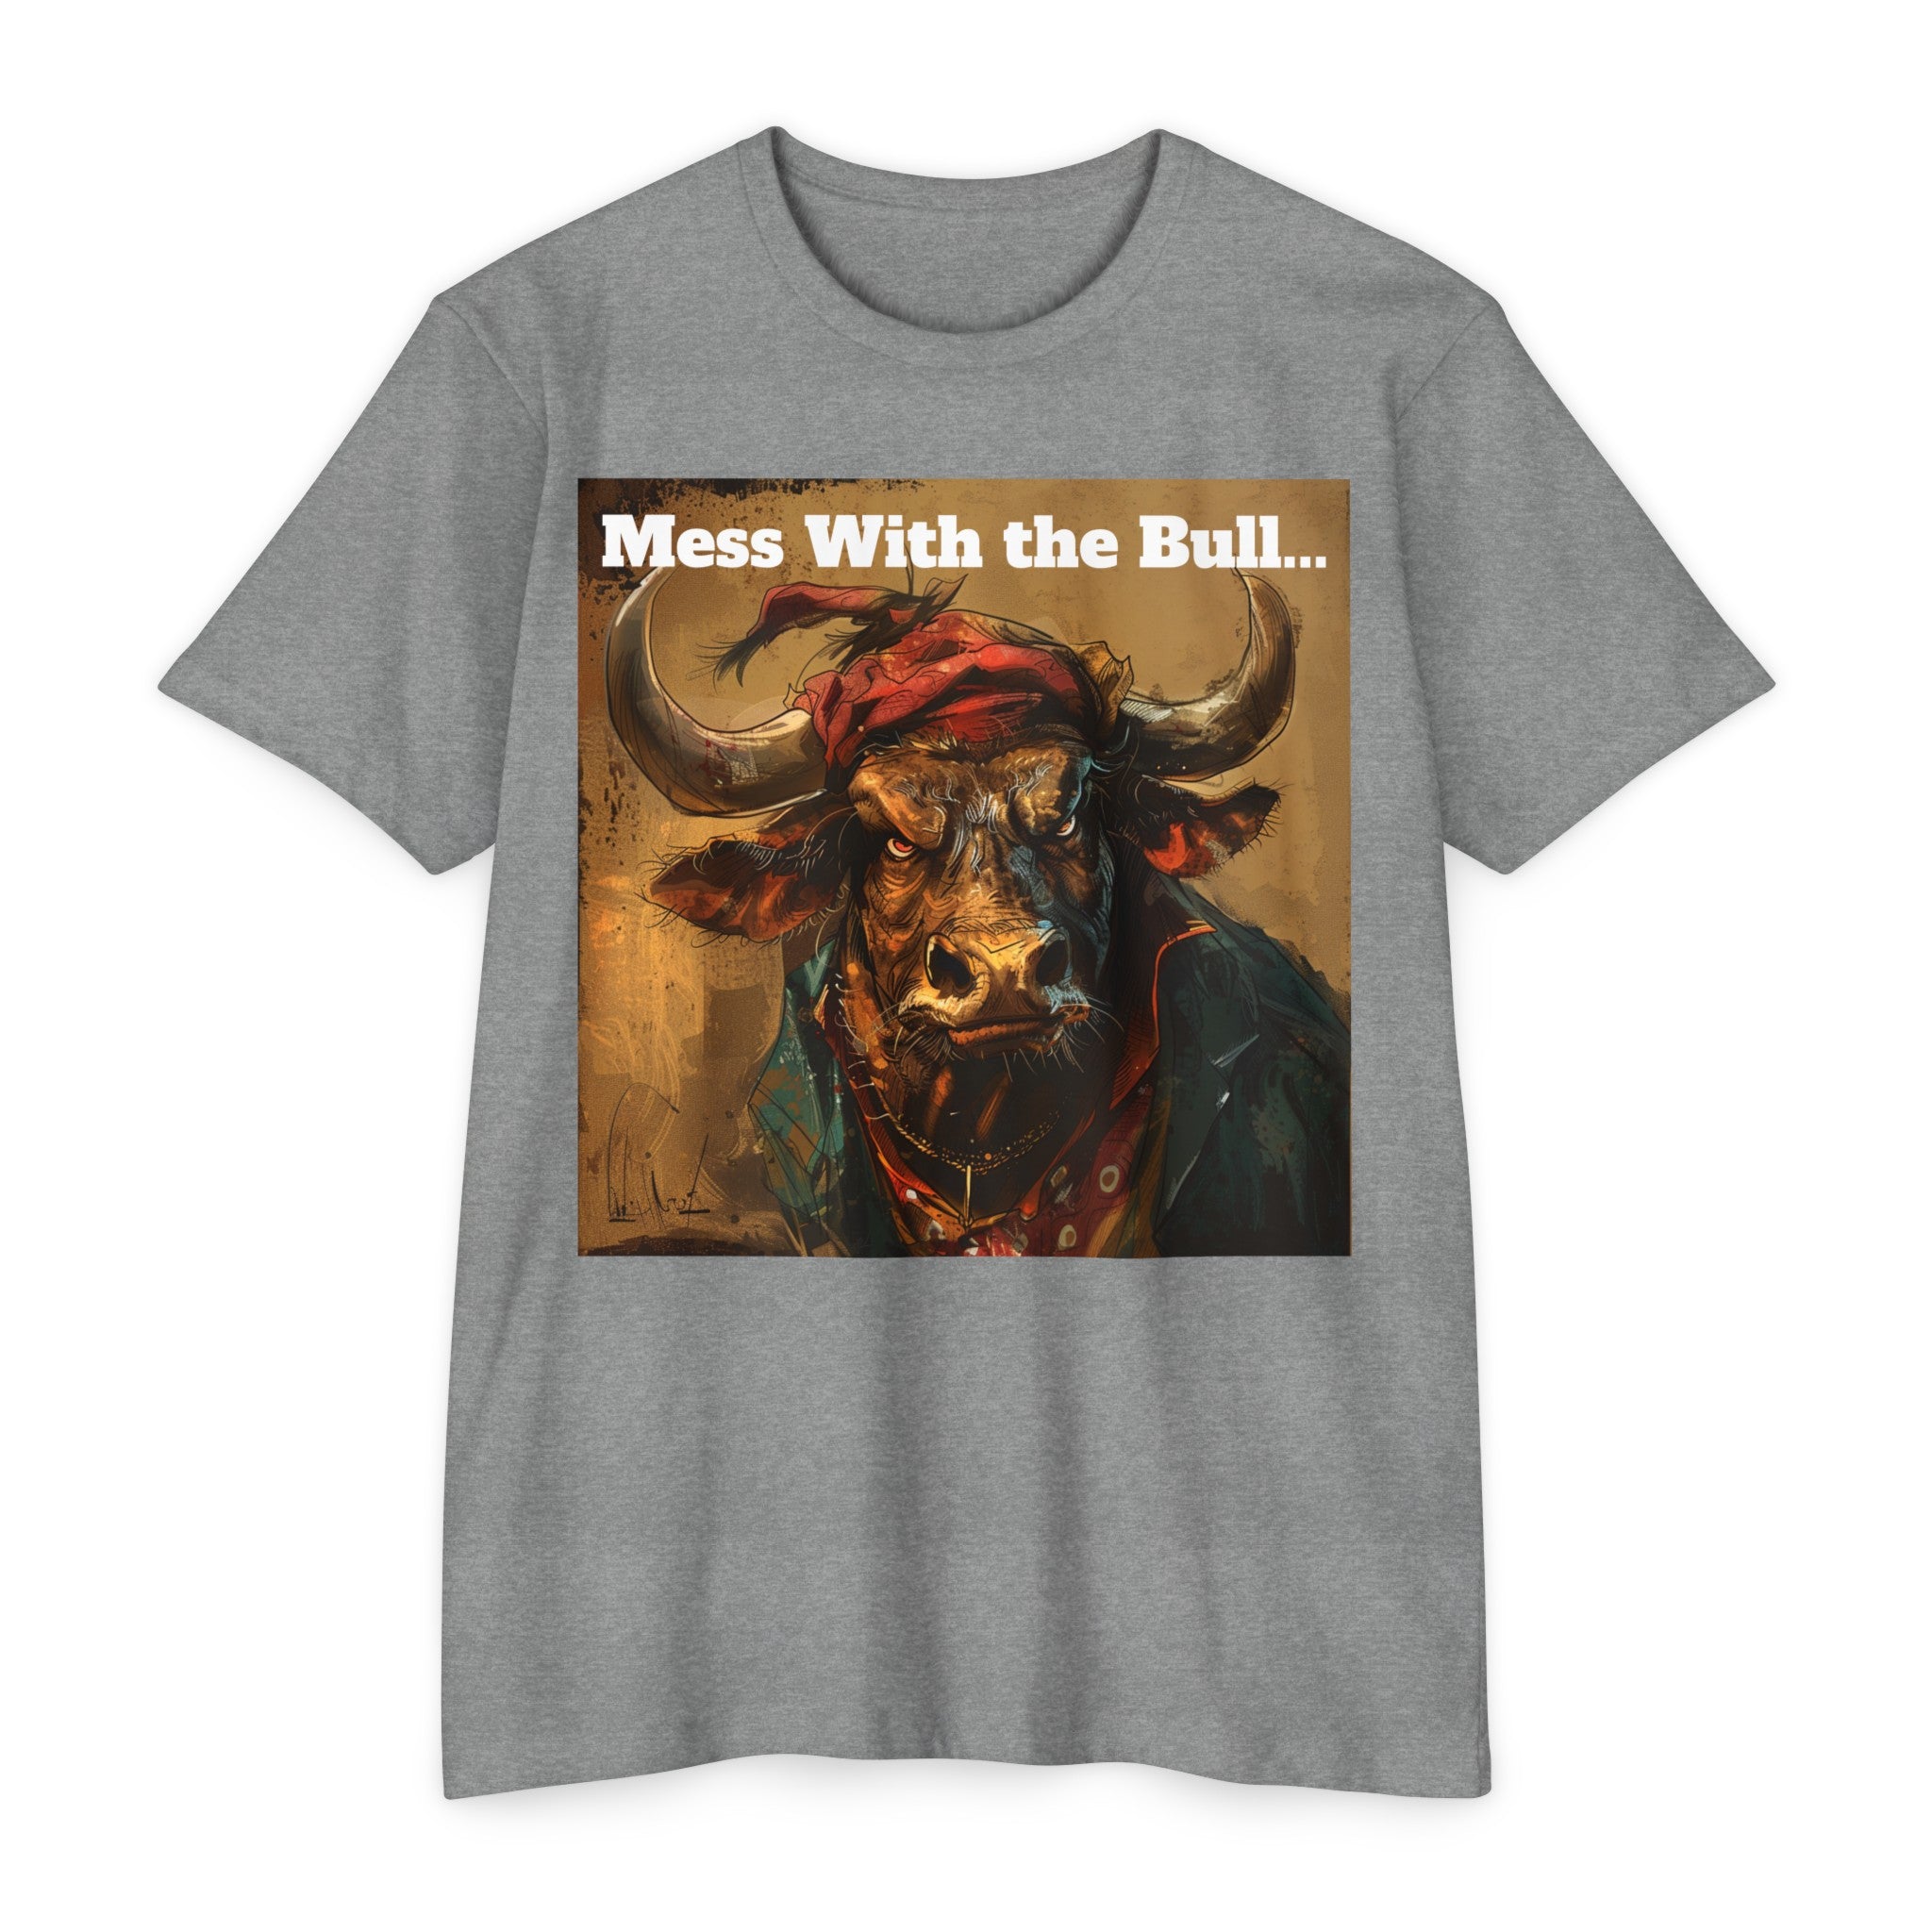 Tough Taurus: 'Mess with the Bull' - No-Nonsense Bull Illustration Unisex CVC Jersey T-Shirt